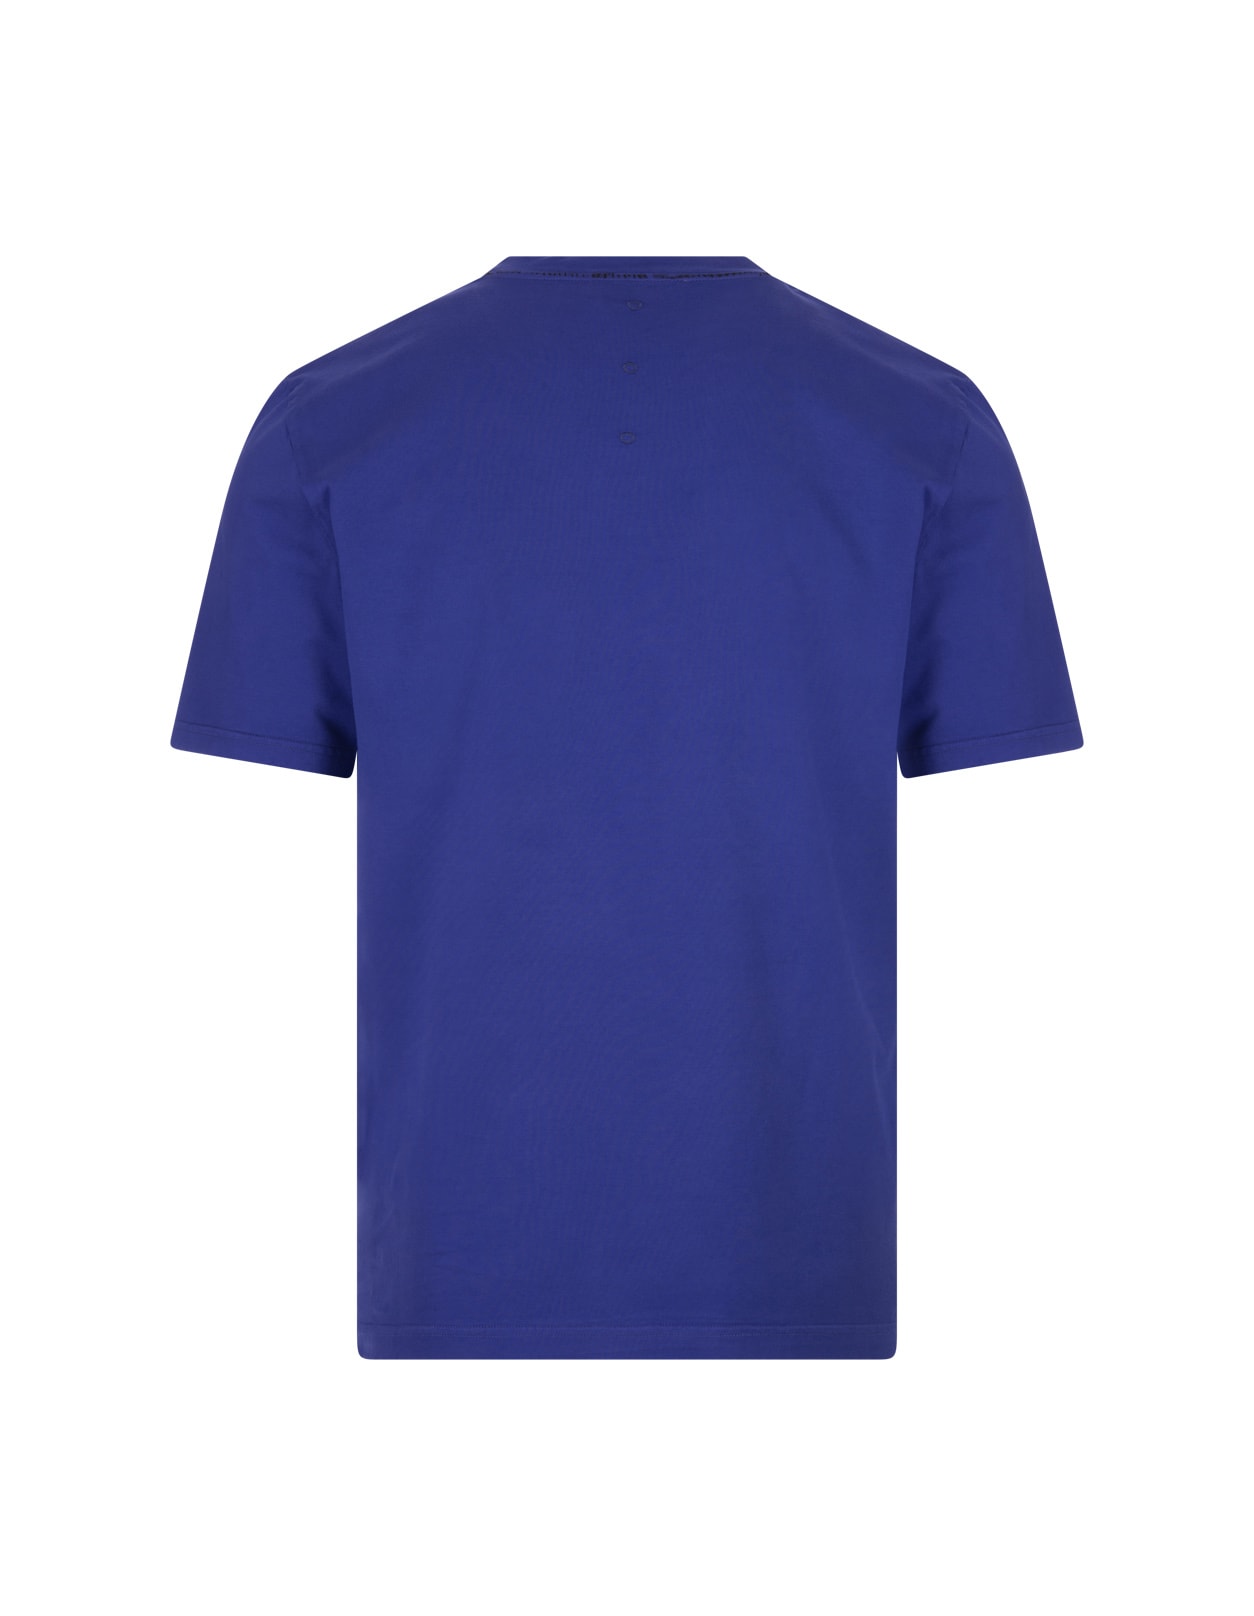 Shop Premiata Blue T-shirt With Never White Print